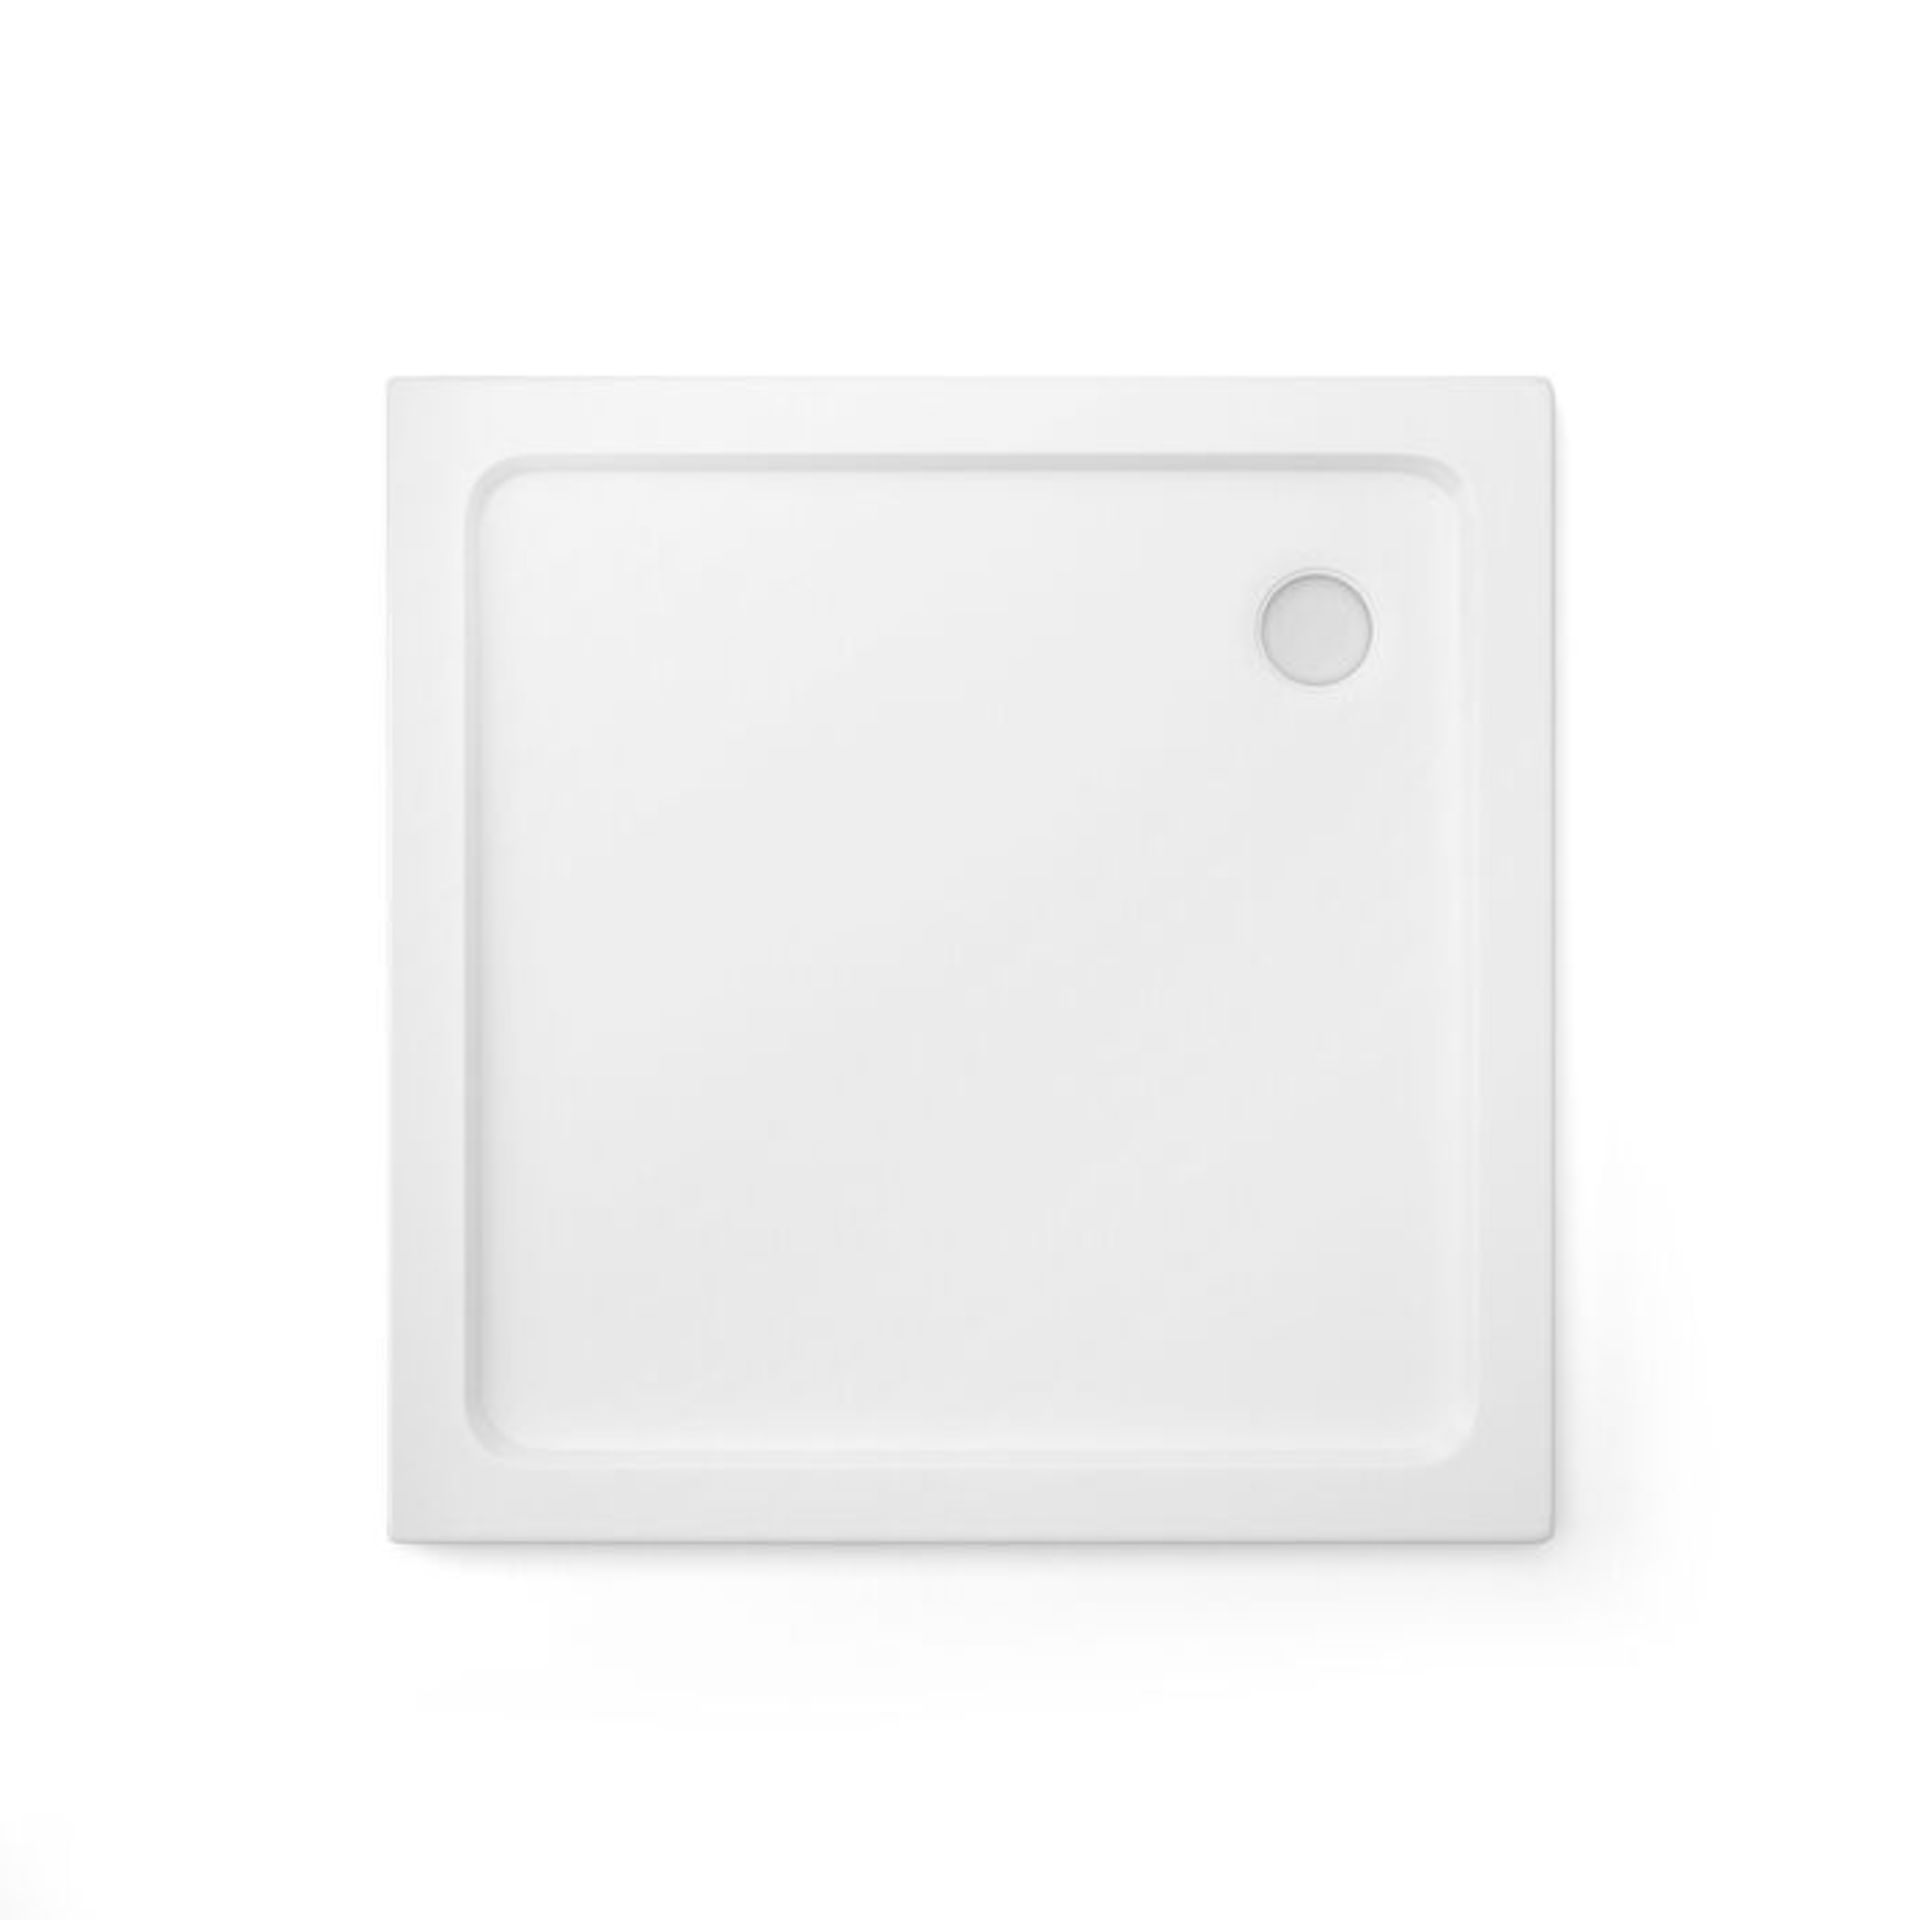 (J129) 900x900mm Square Ultra Slim Stone Shower Tray. Low profile ultra slim design Gel coate...